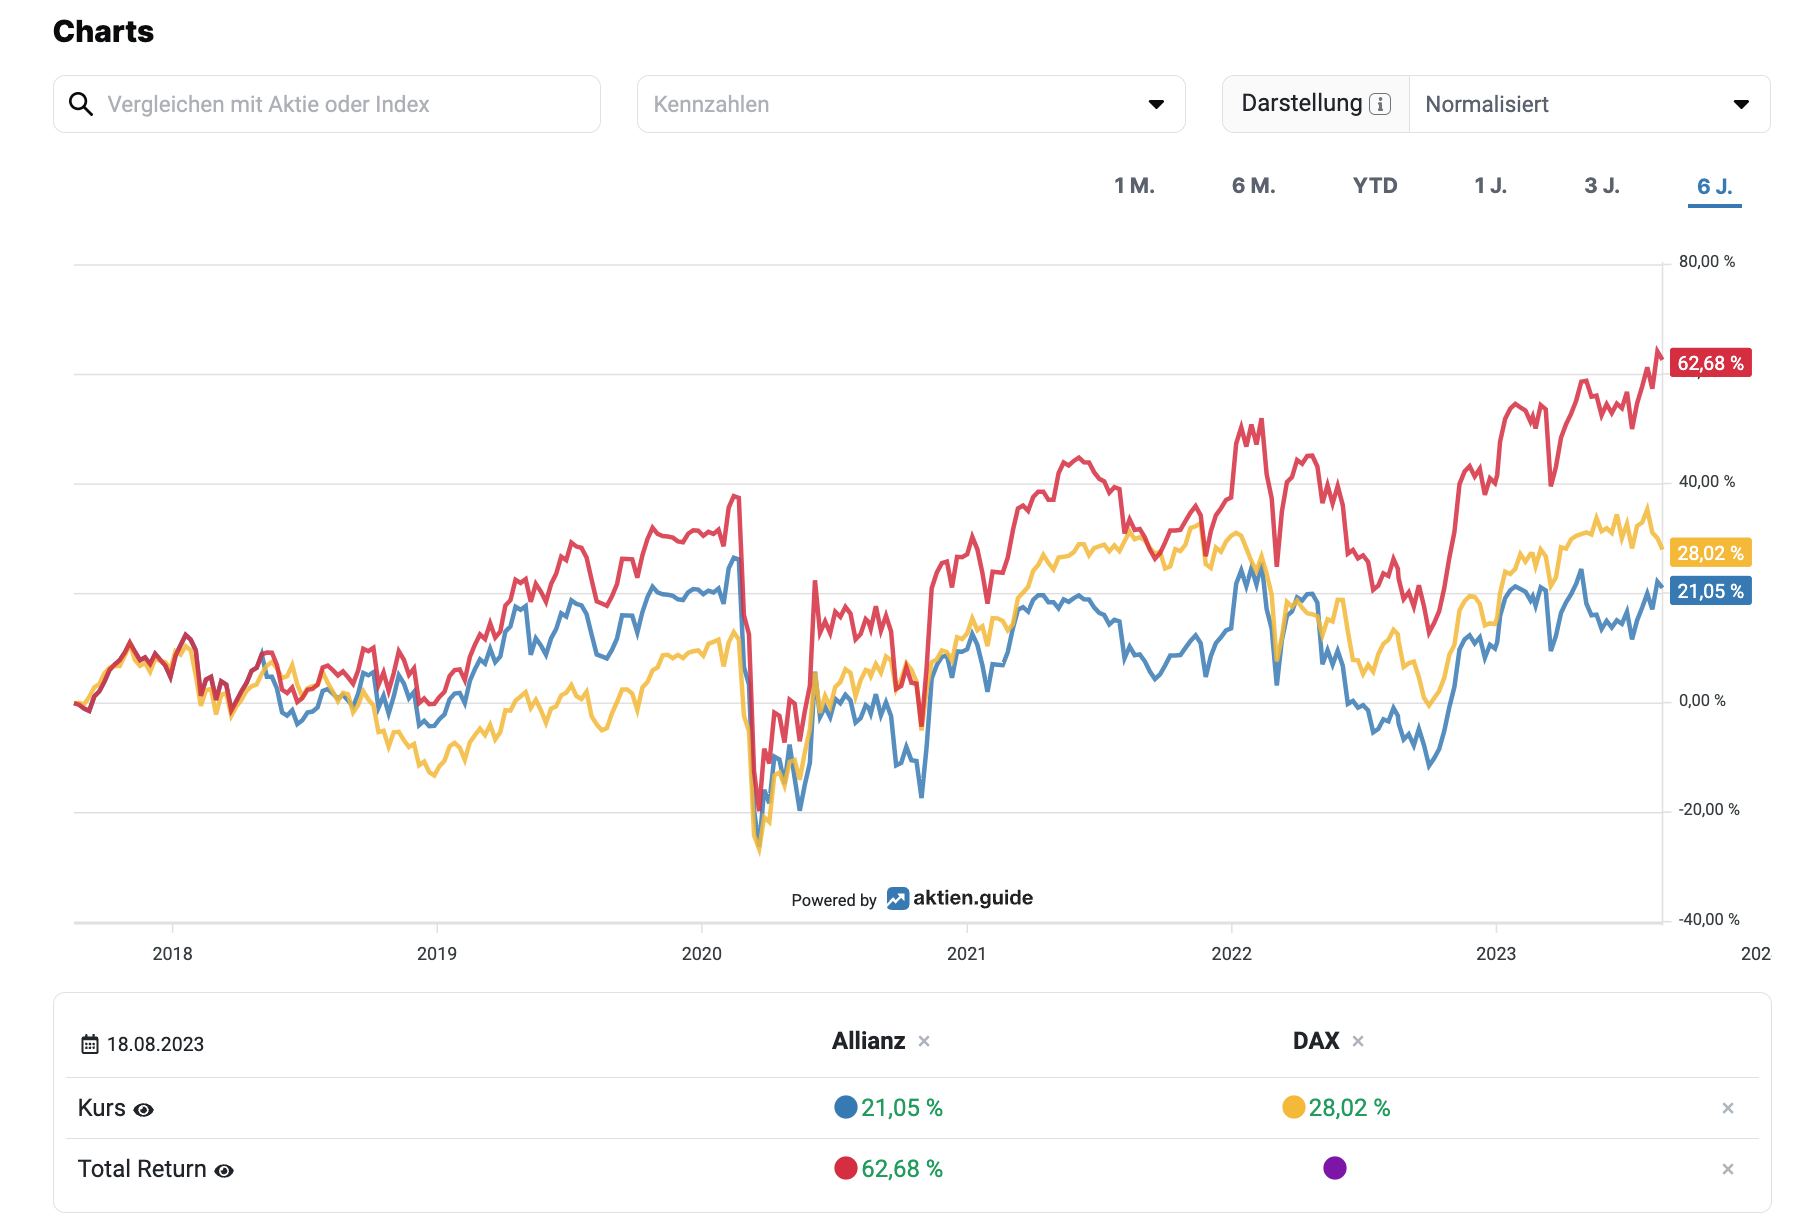 Allianz vs DAX Index Total Return